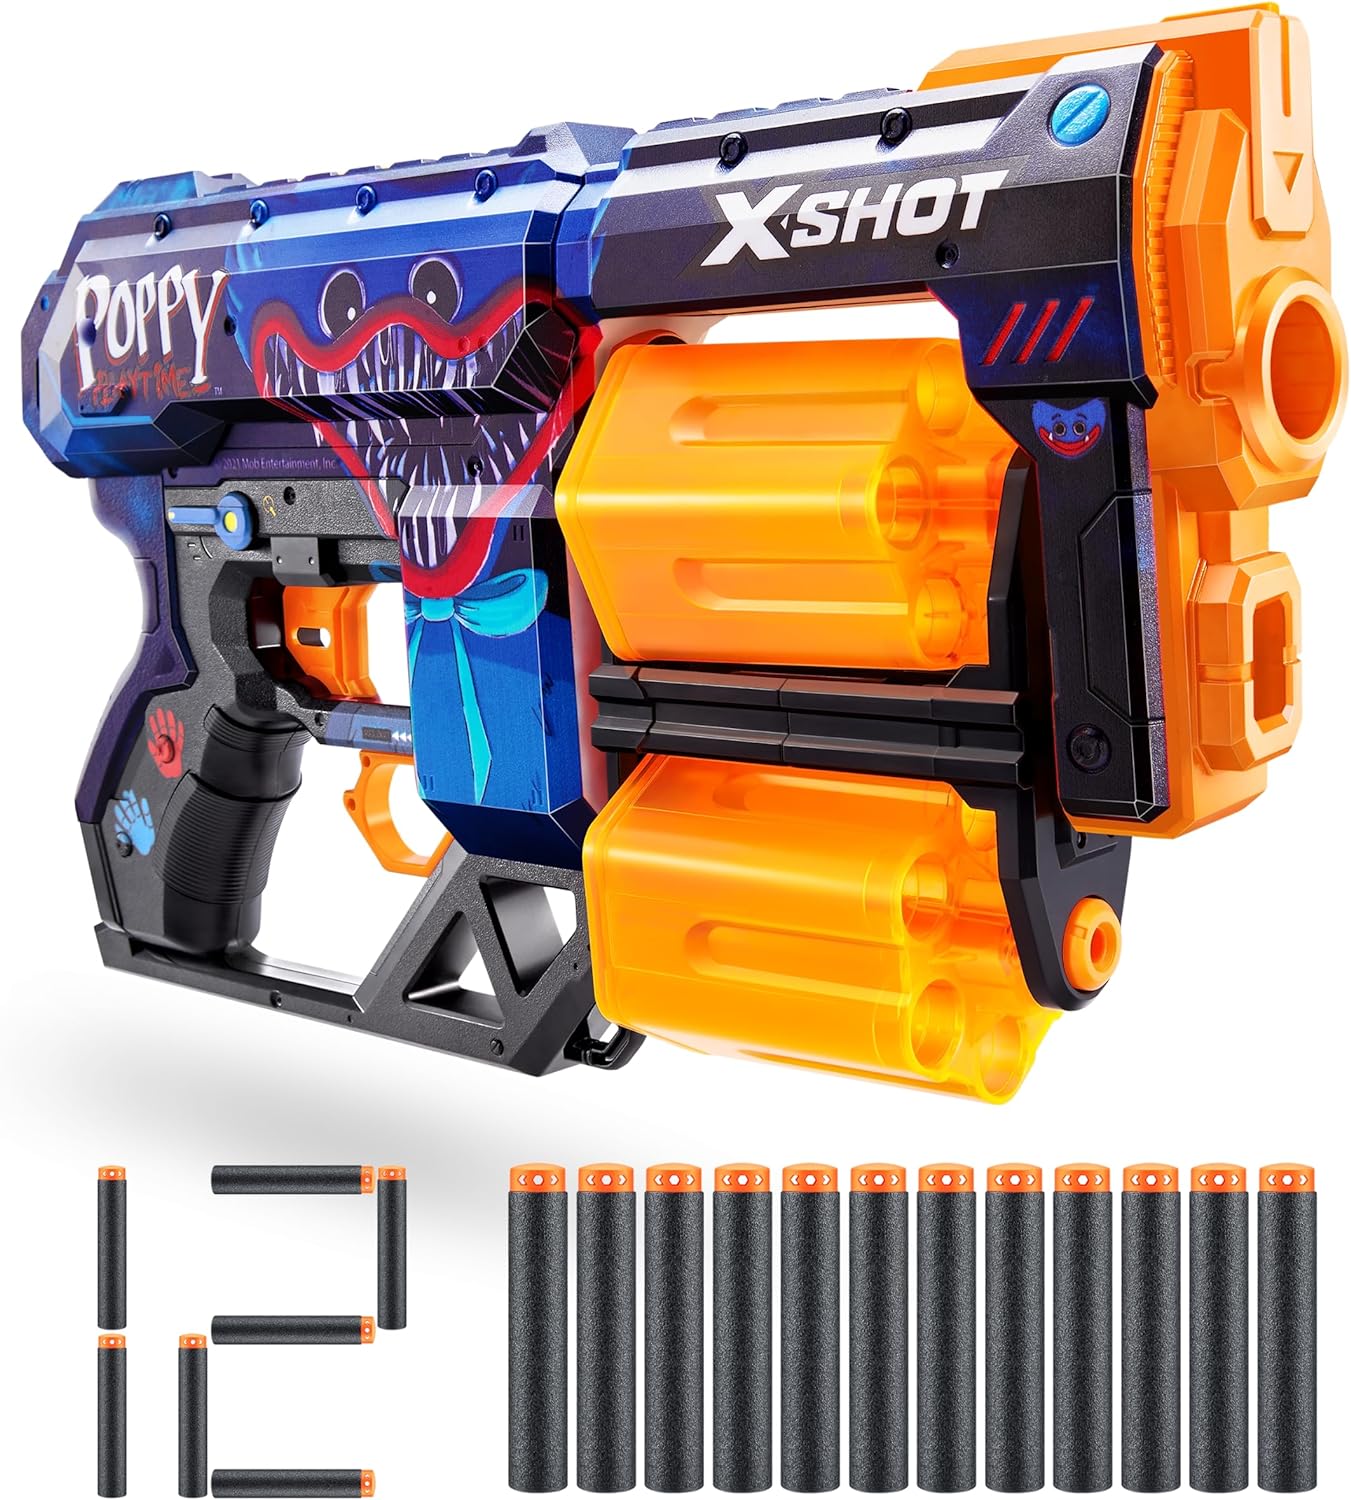 XShot X-Shot Skins Dread Poppy Playtime - Jumpscare (12 Darts) by ZURU, Frustration Free Packaging, Easy Reload, Air Pocket Dart Technology, Toy Foam Dart Blaster for Kids, Teens, Adults